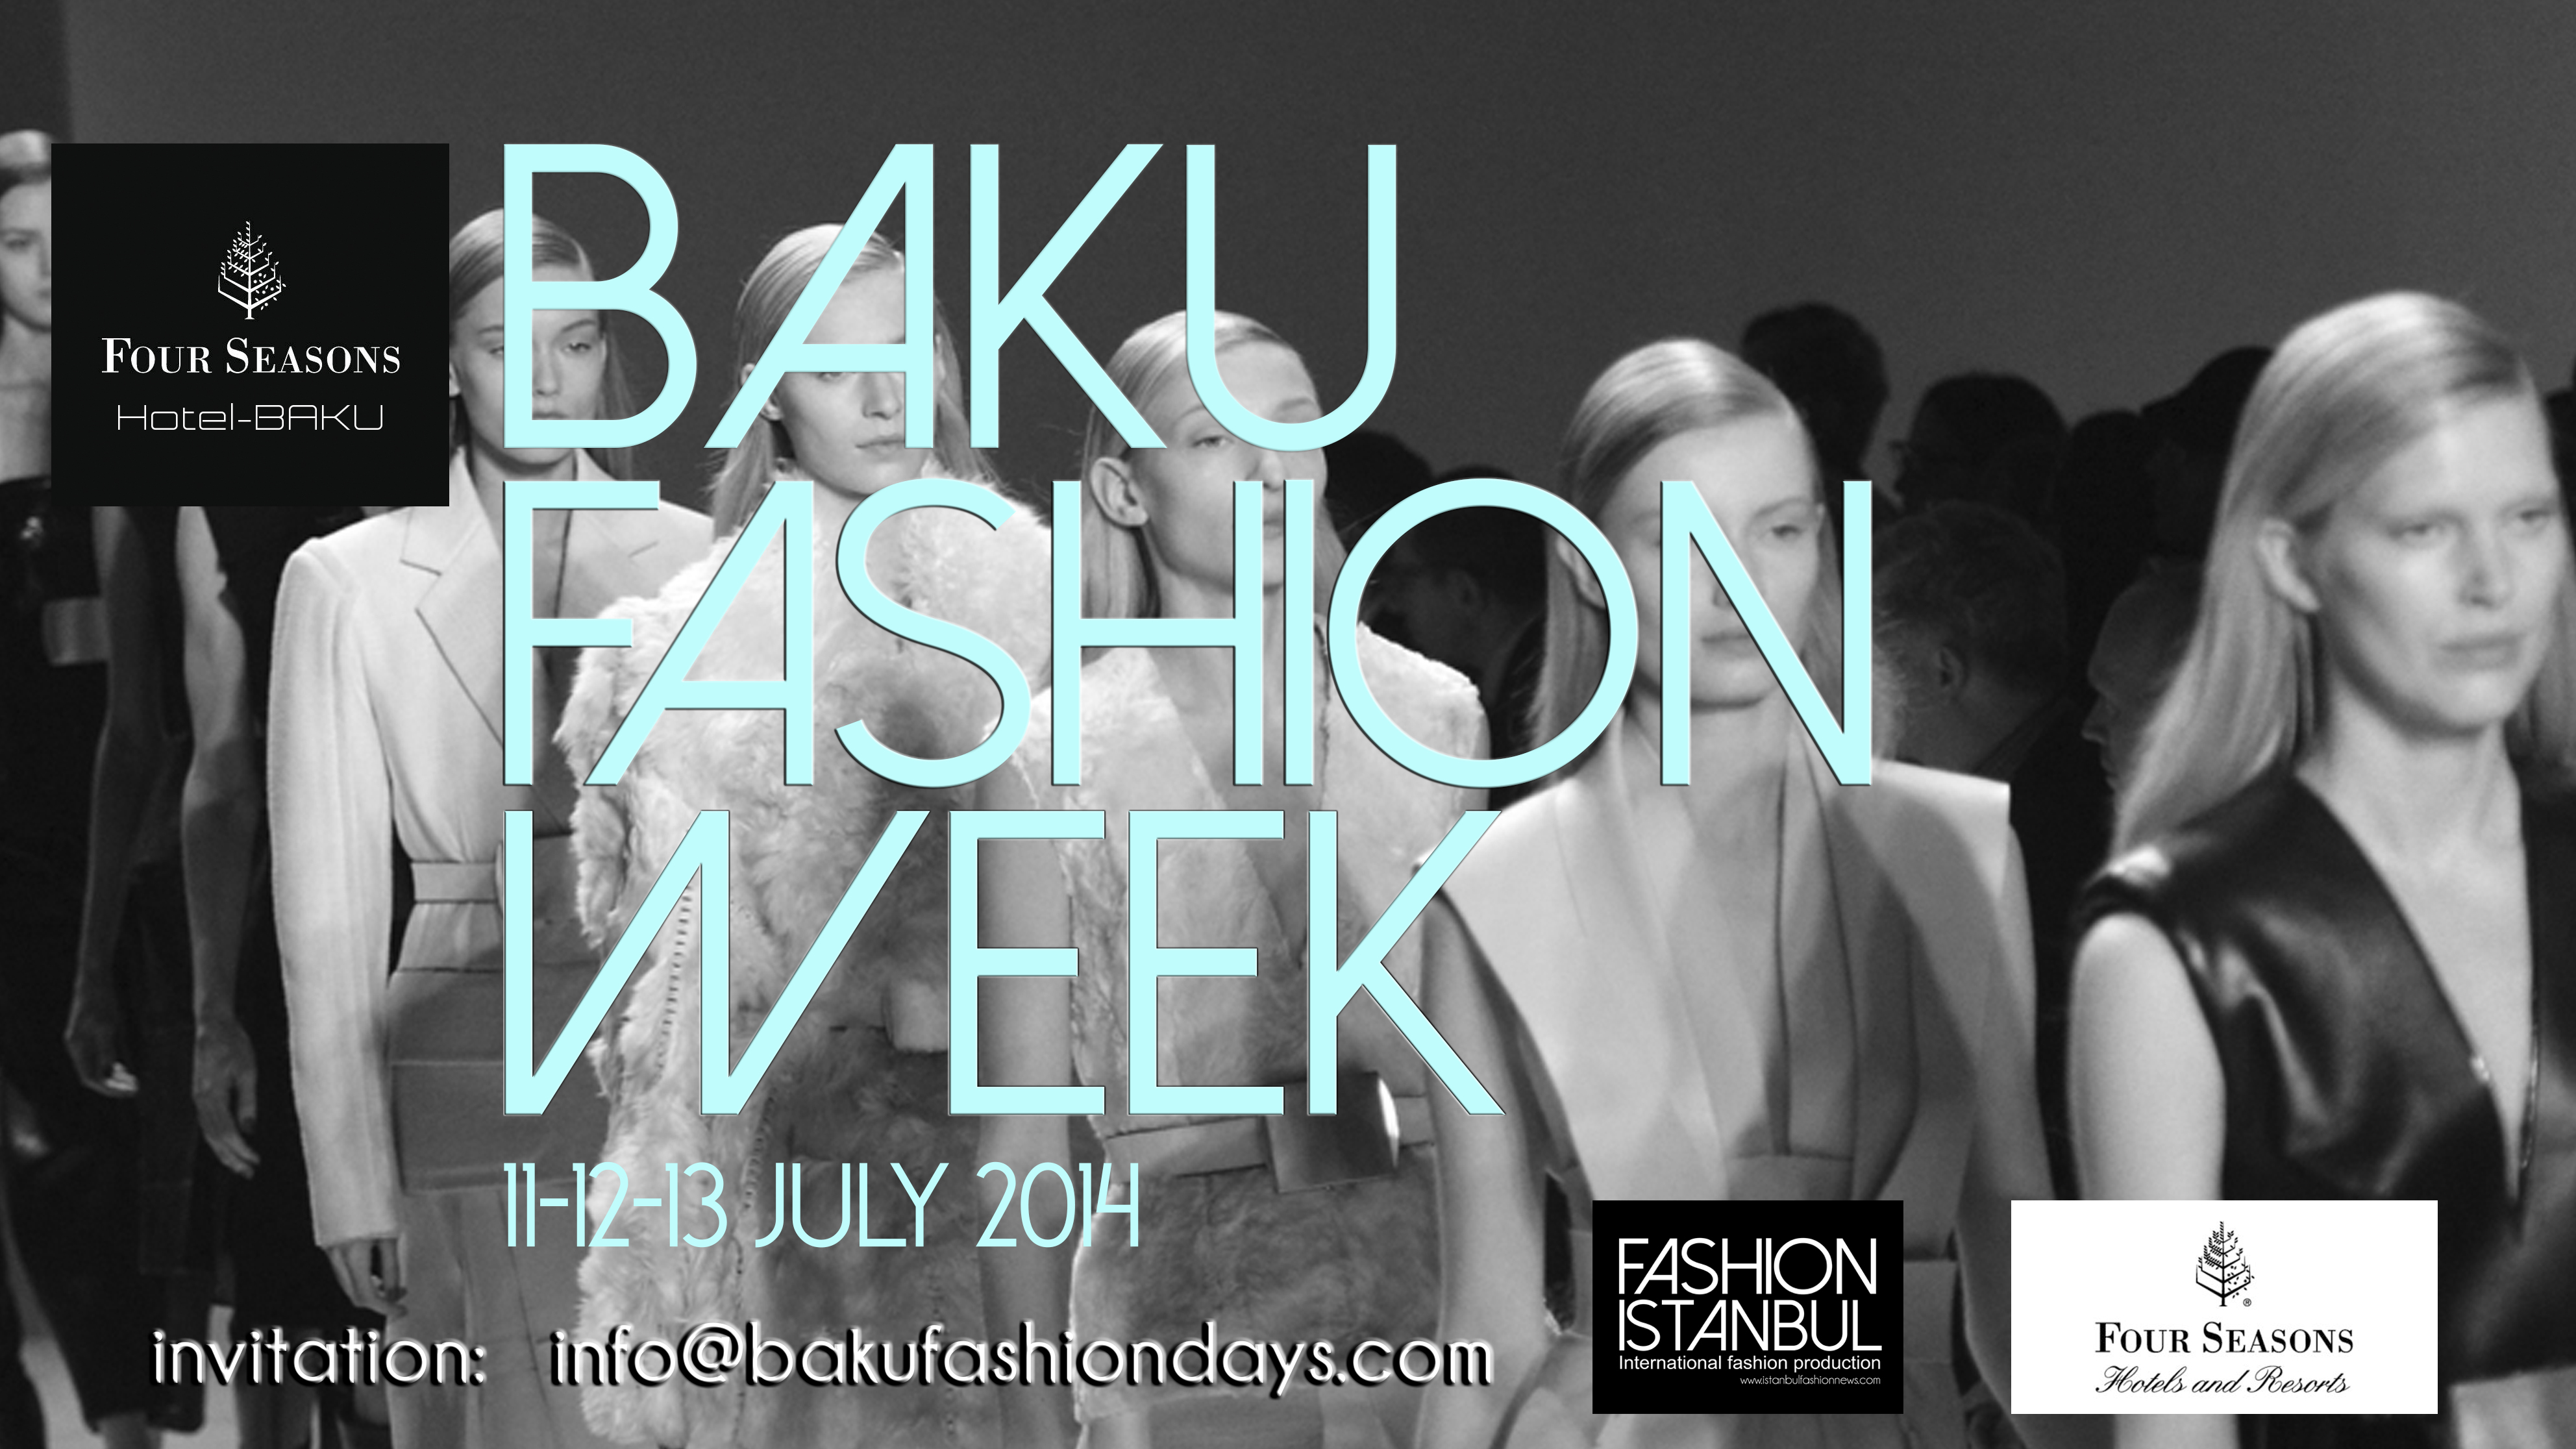 Baku bracing for Fashion Week